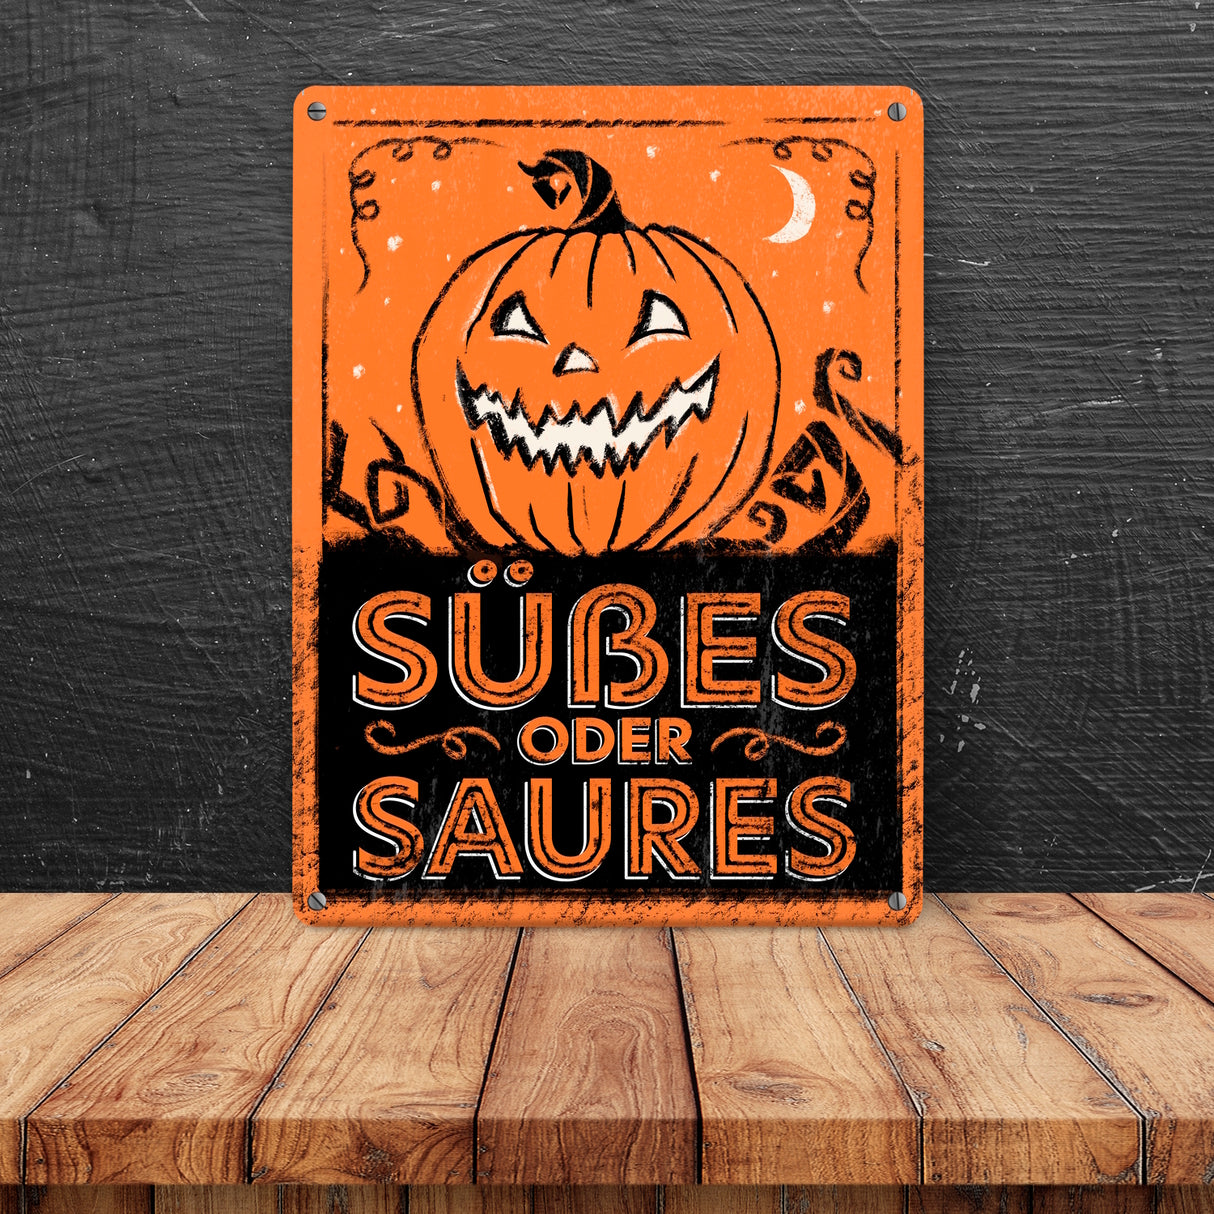 Metallschild mit Halloween Kürbis Motiv im used Look - Süßes oder Saures